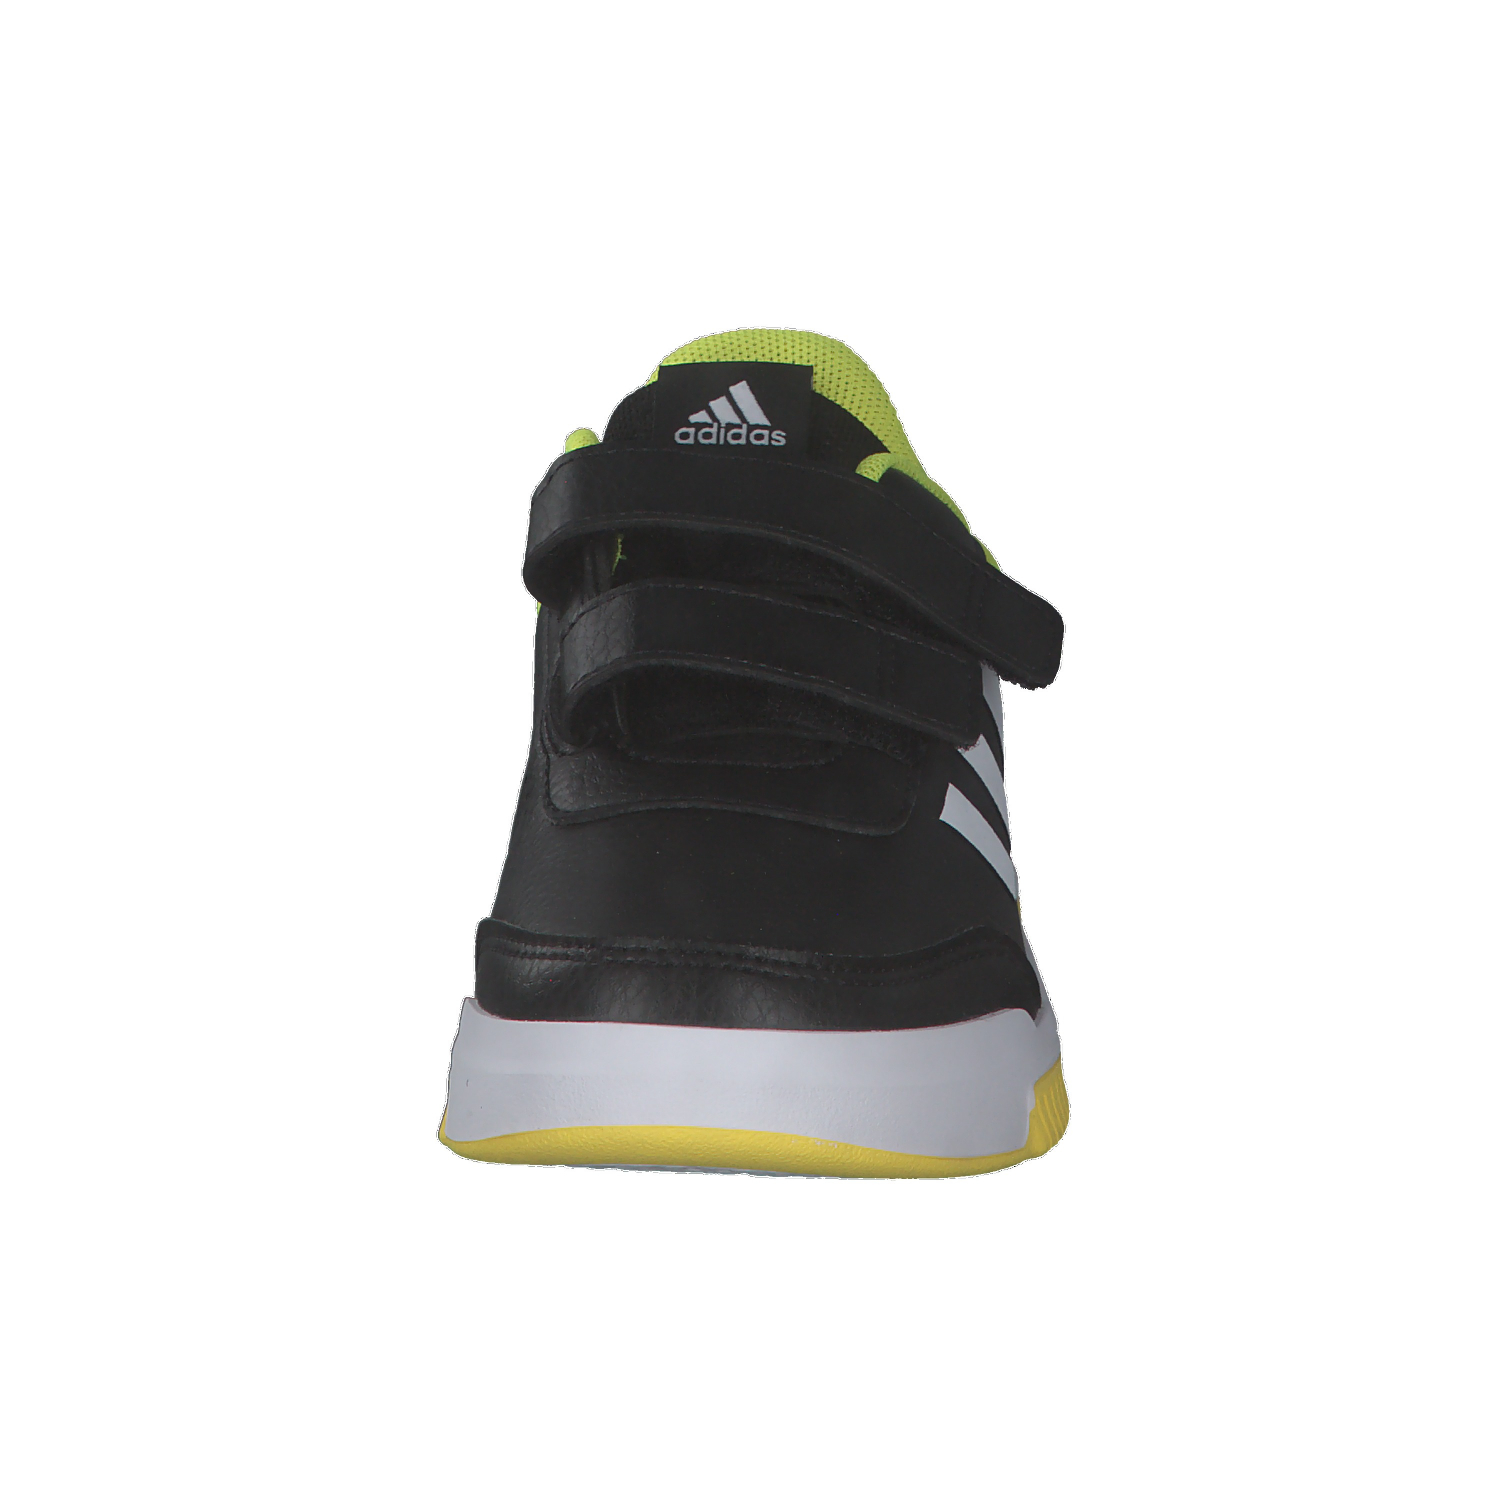 adidas kids sneaker tensaur 2.0 CF | eBay